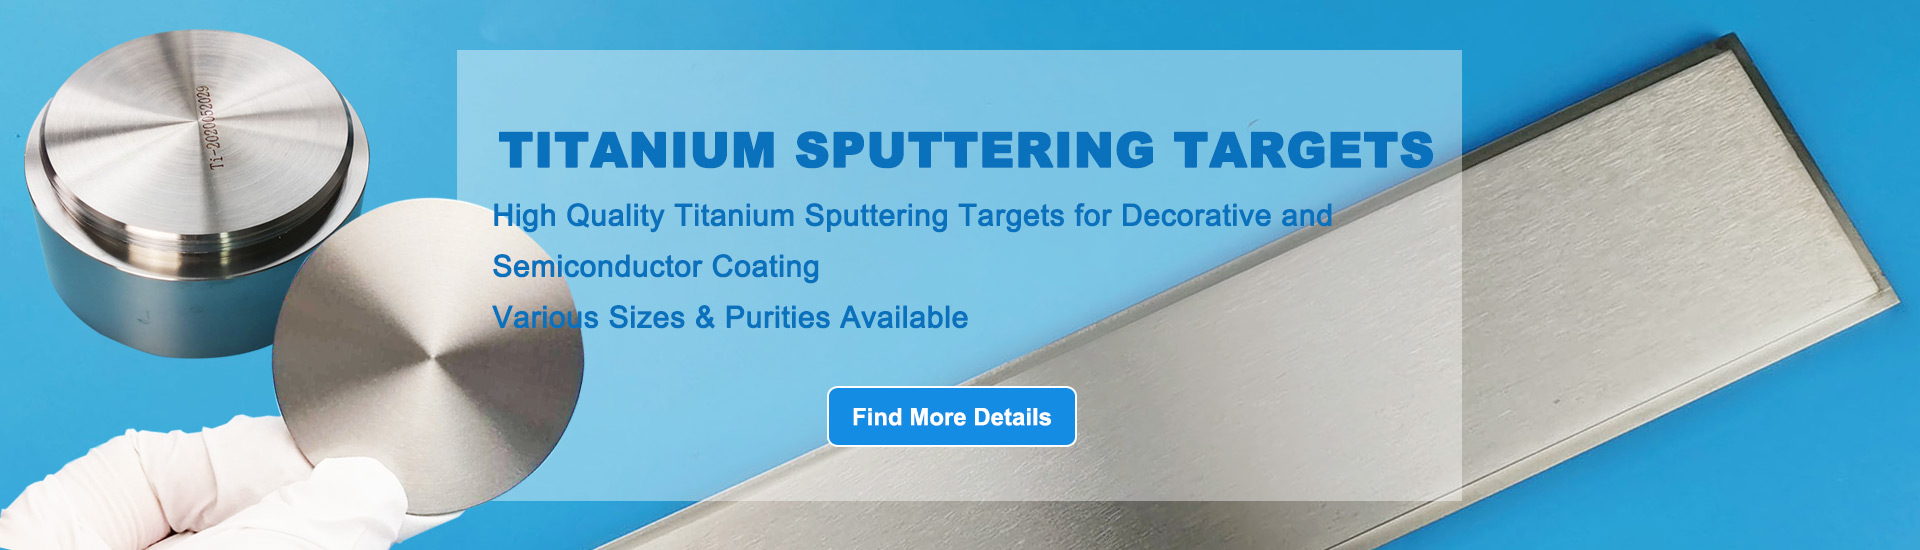 
Titanium Sputtering Targets